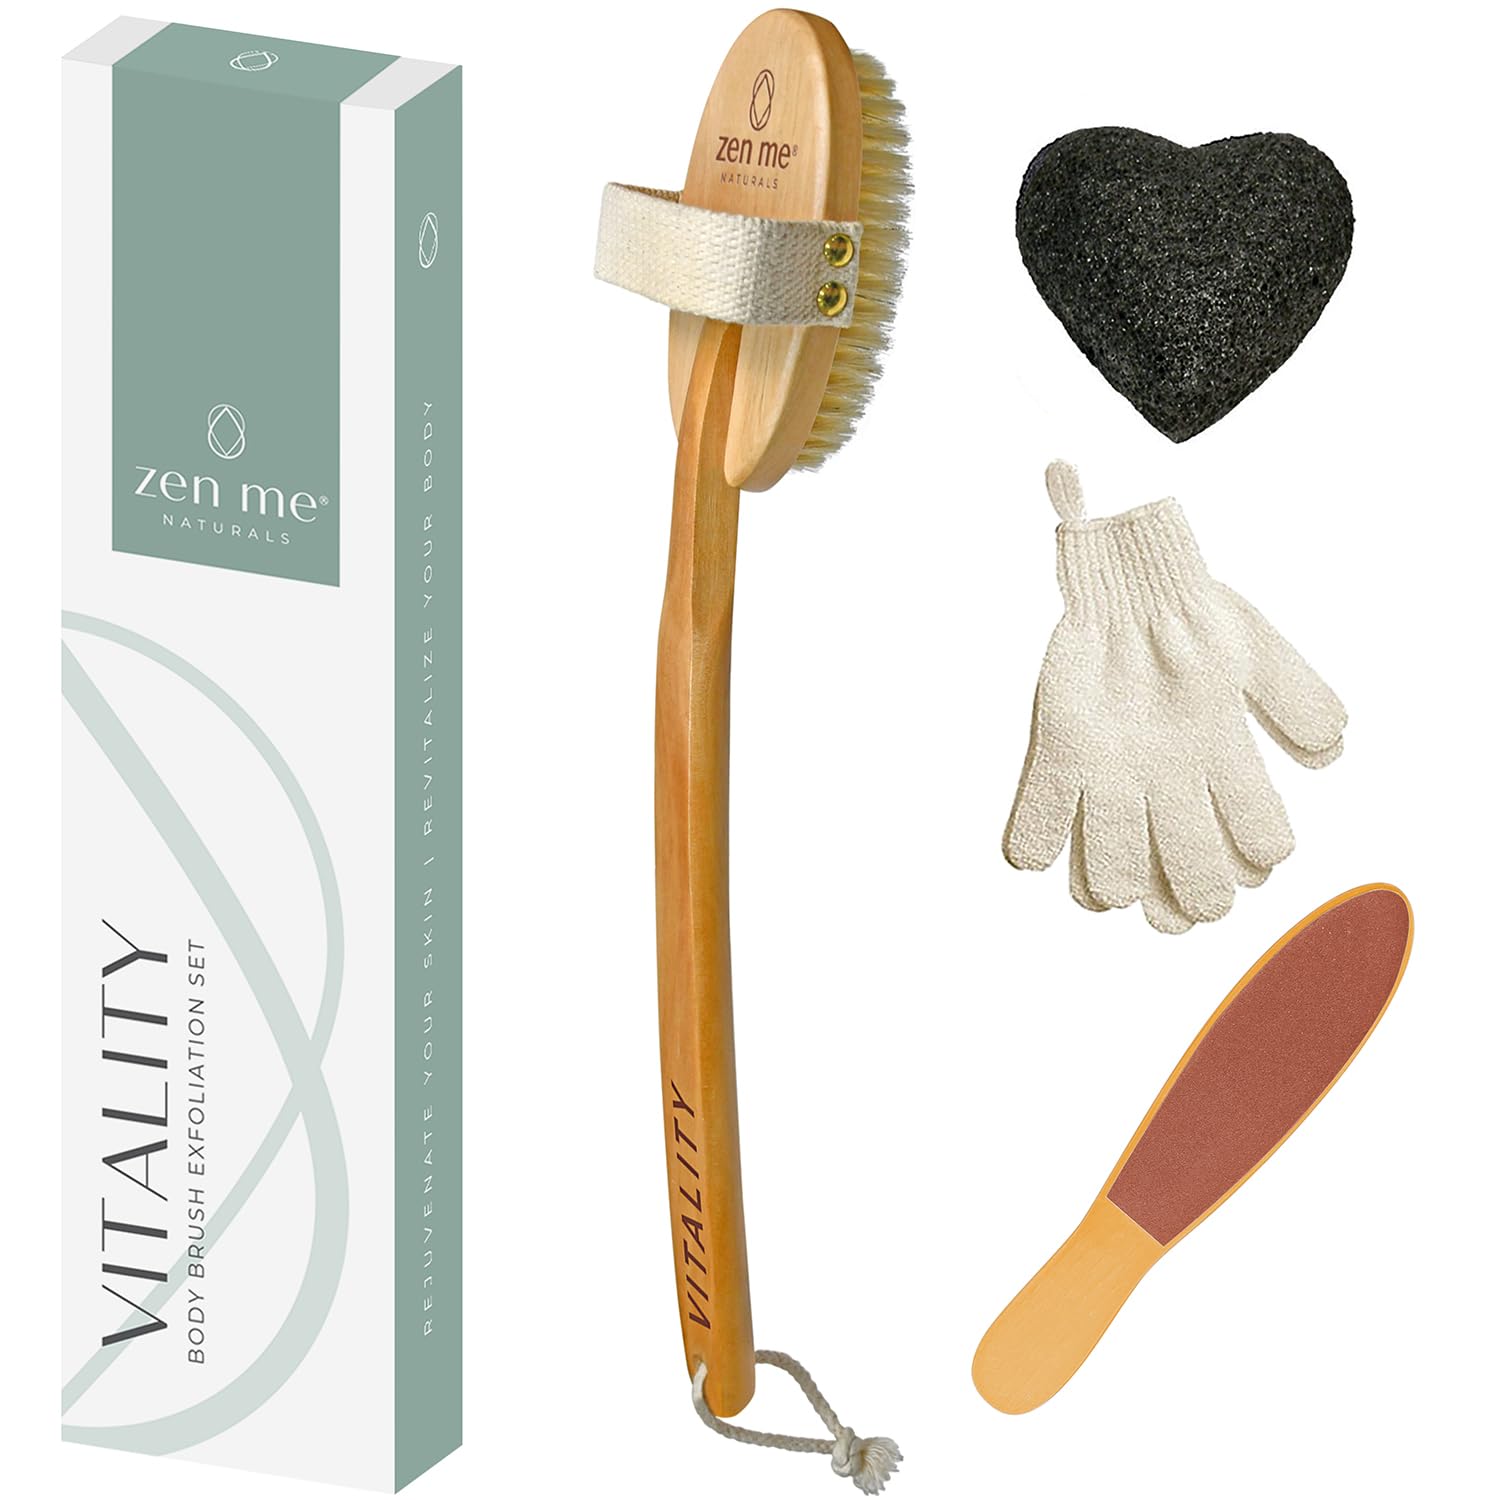 ZEN ME Dry Brushing Body Brush Set for Lymphatic Drainage - Natural Exfoliation Kit with Premium Boar Bristle Brush, Exfoliating Gloves, Konjac Facial Sponge & Foot File, for Bath or Shower